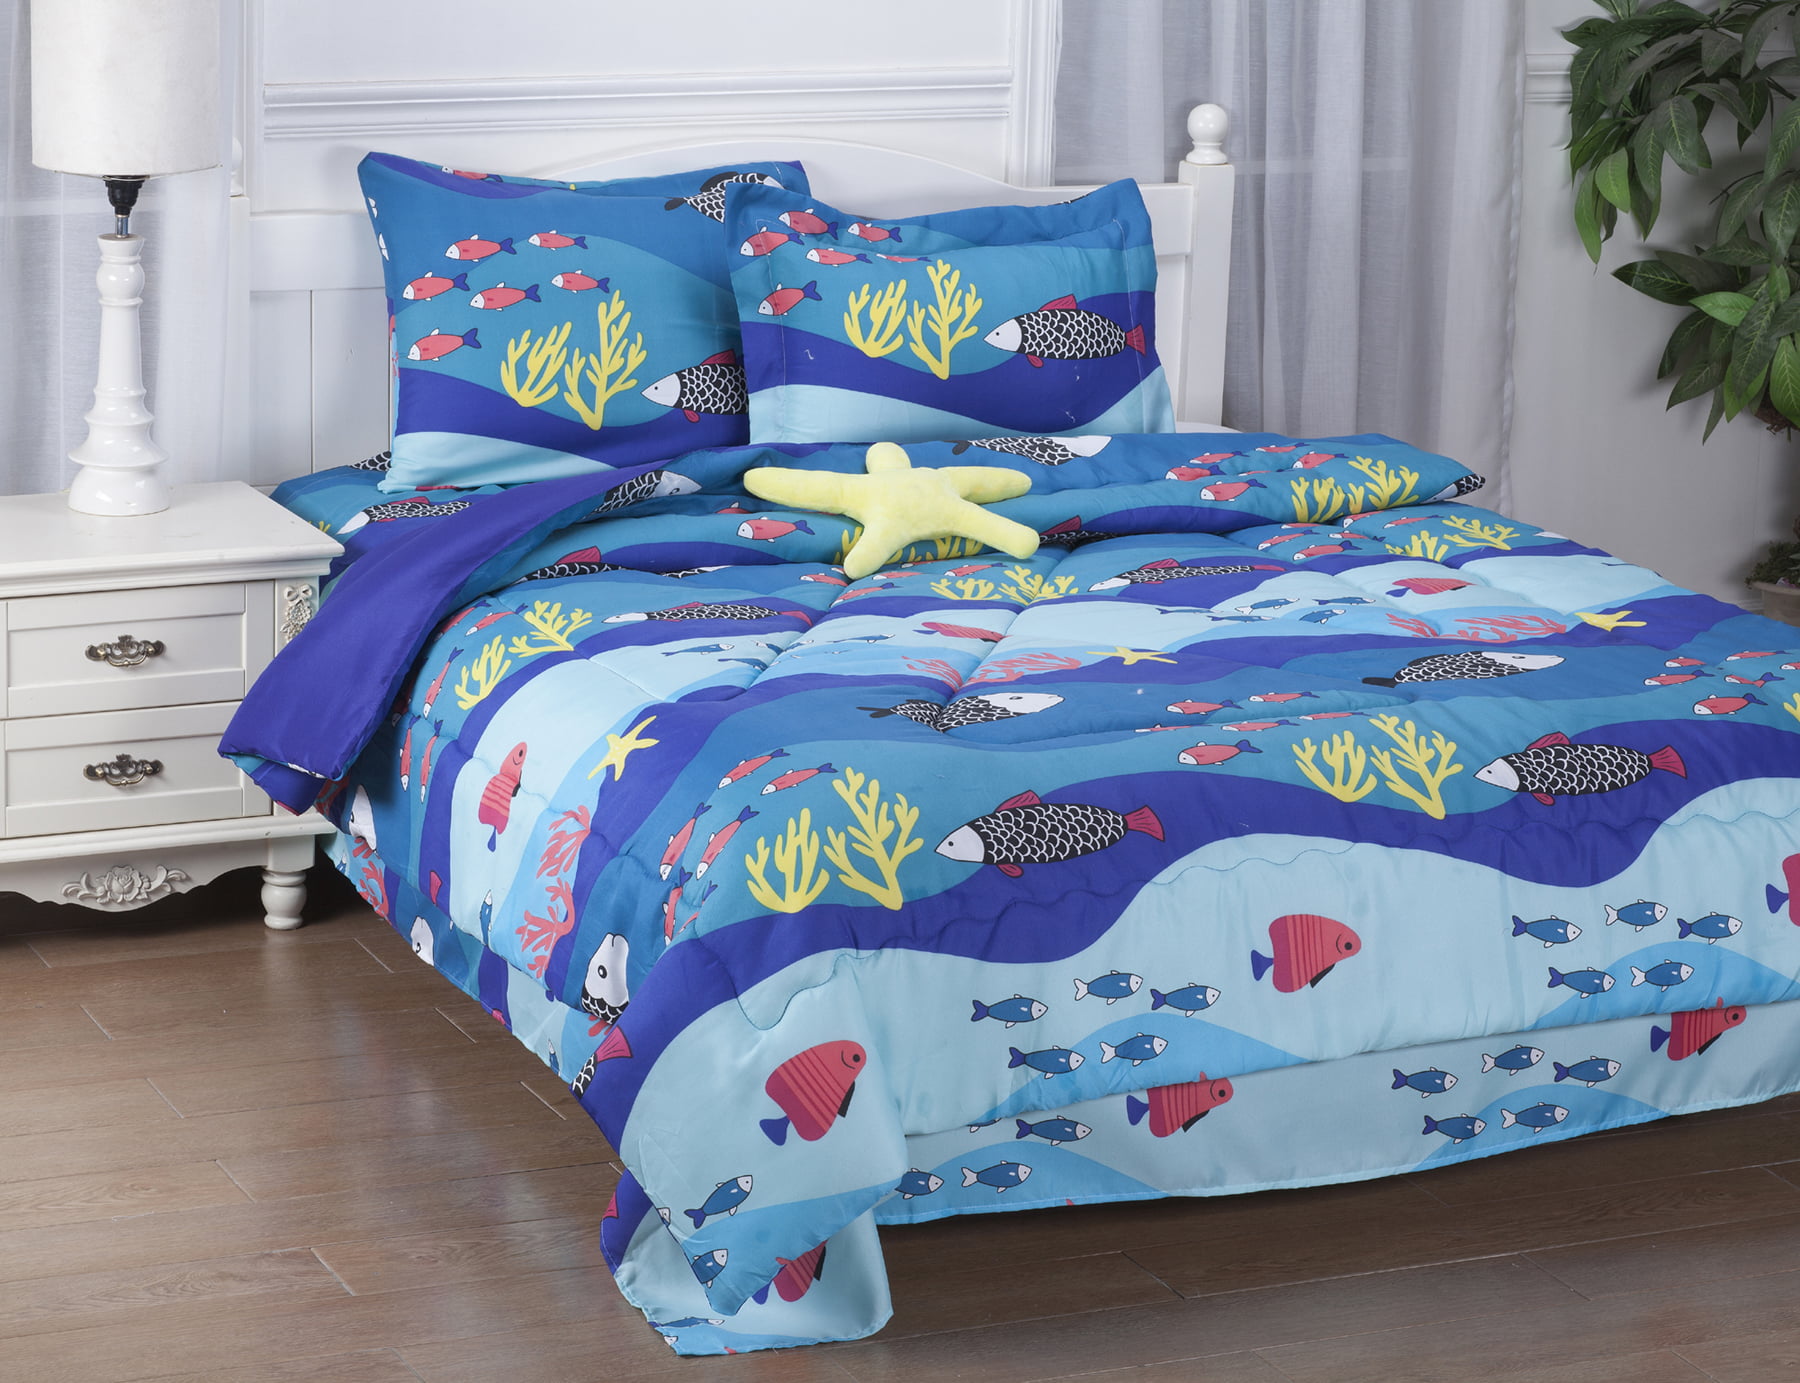 TWIN SEA STAR KIDS BEDDING SET, Beautiful Microfiber Comforter With